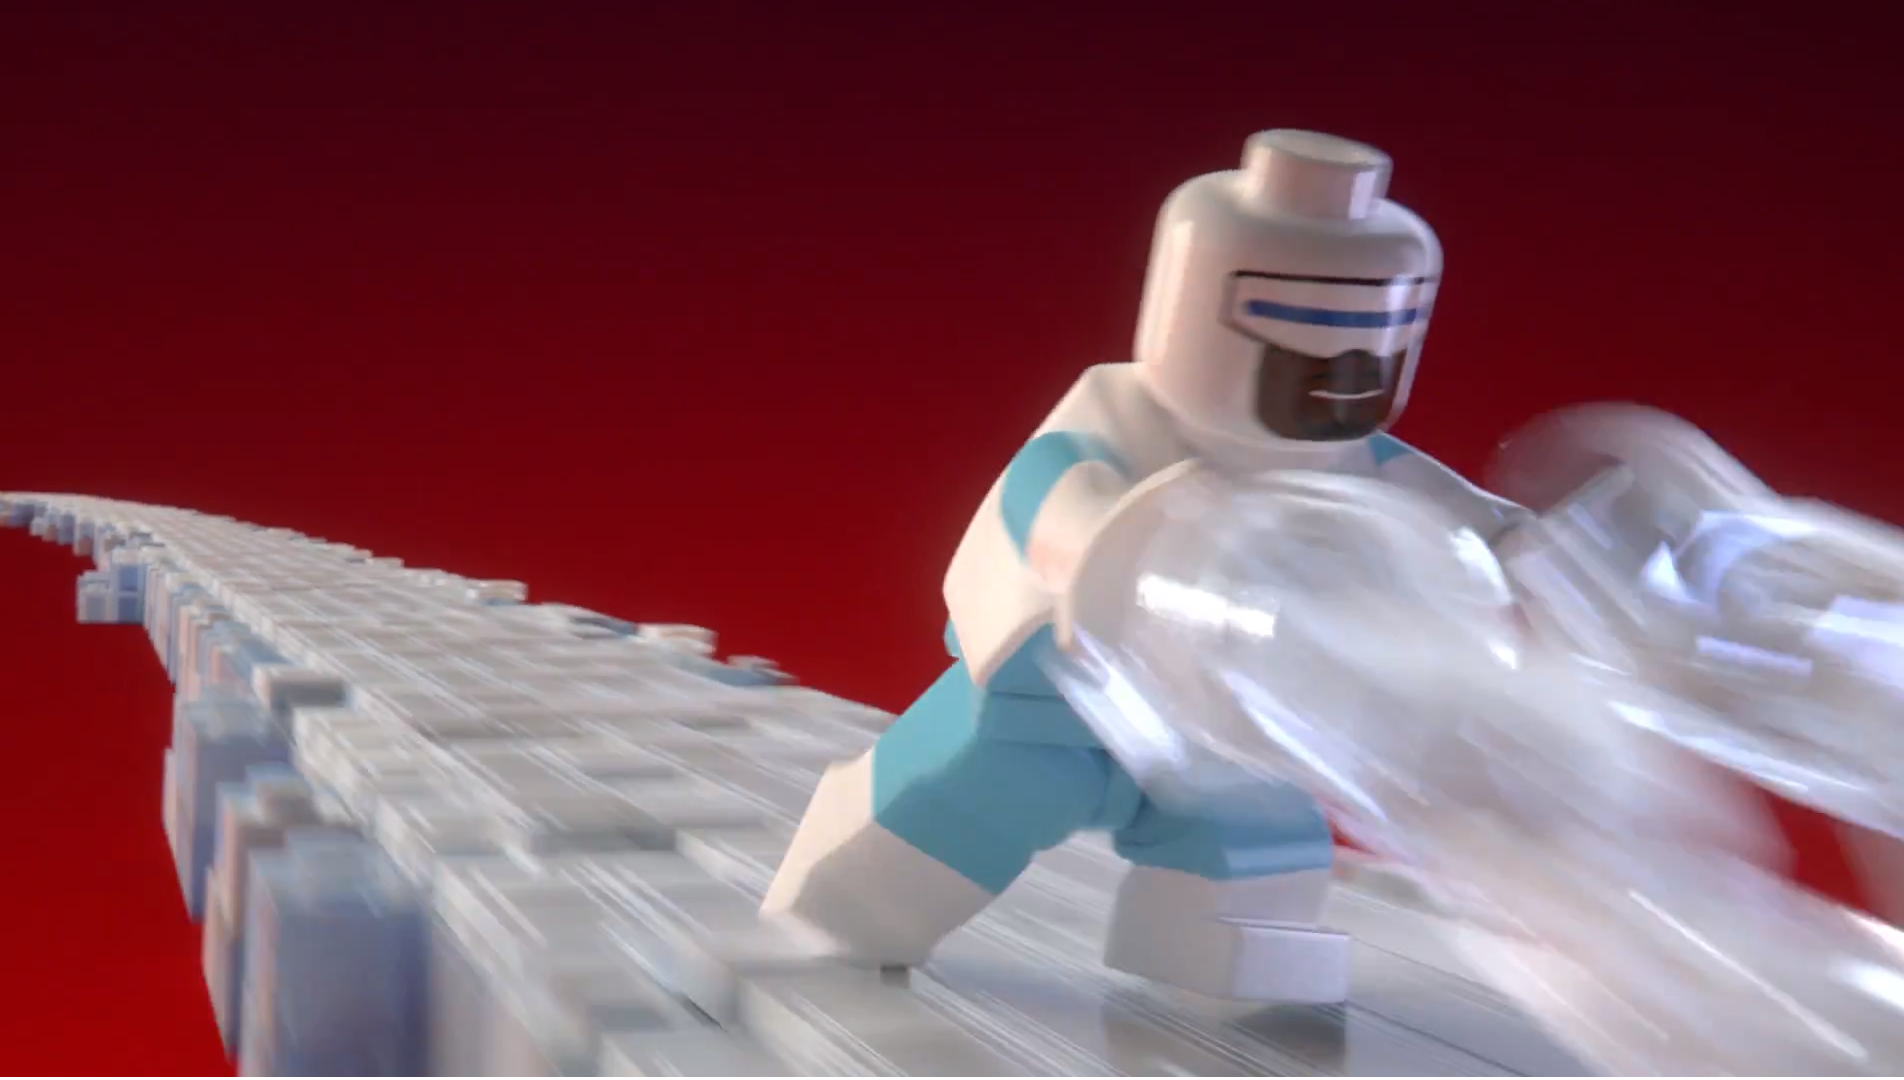 Lego Incredibles Cheat Codes and Stud Unlocks - All Red Bricks and Incredibrick | VG247